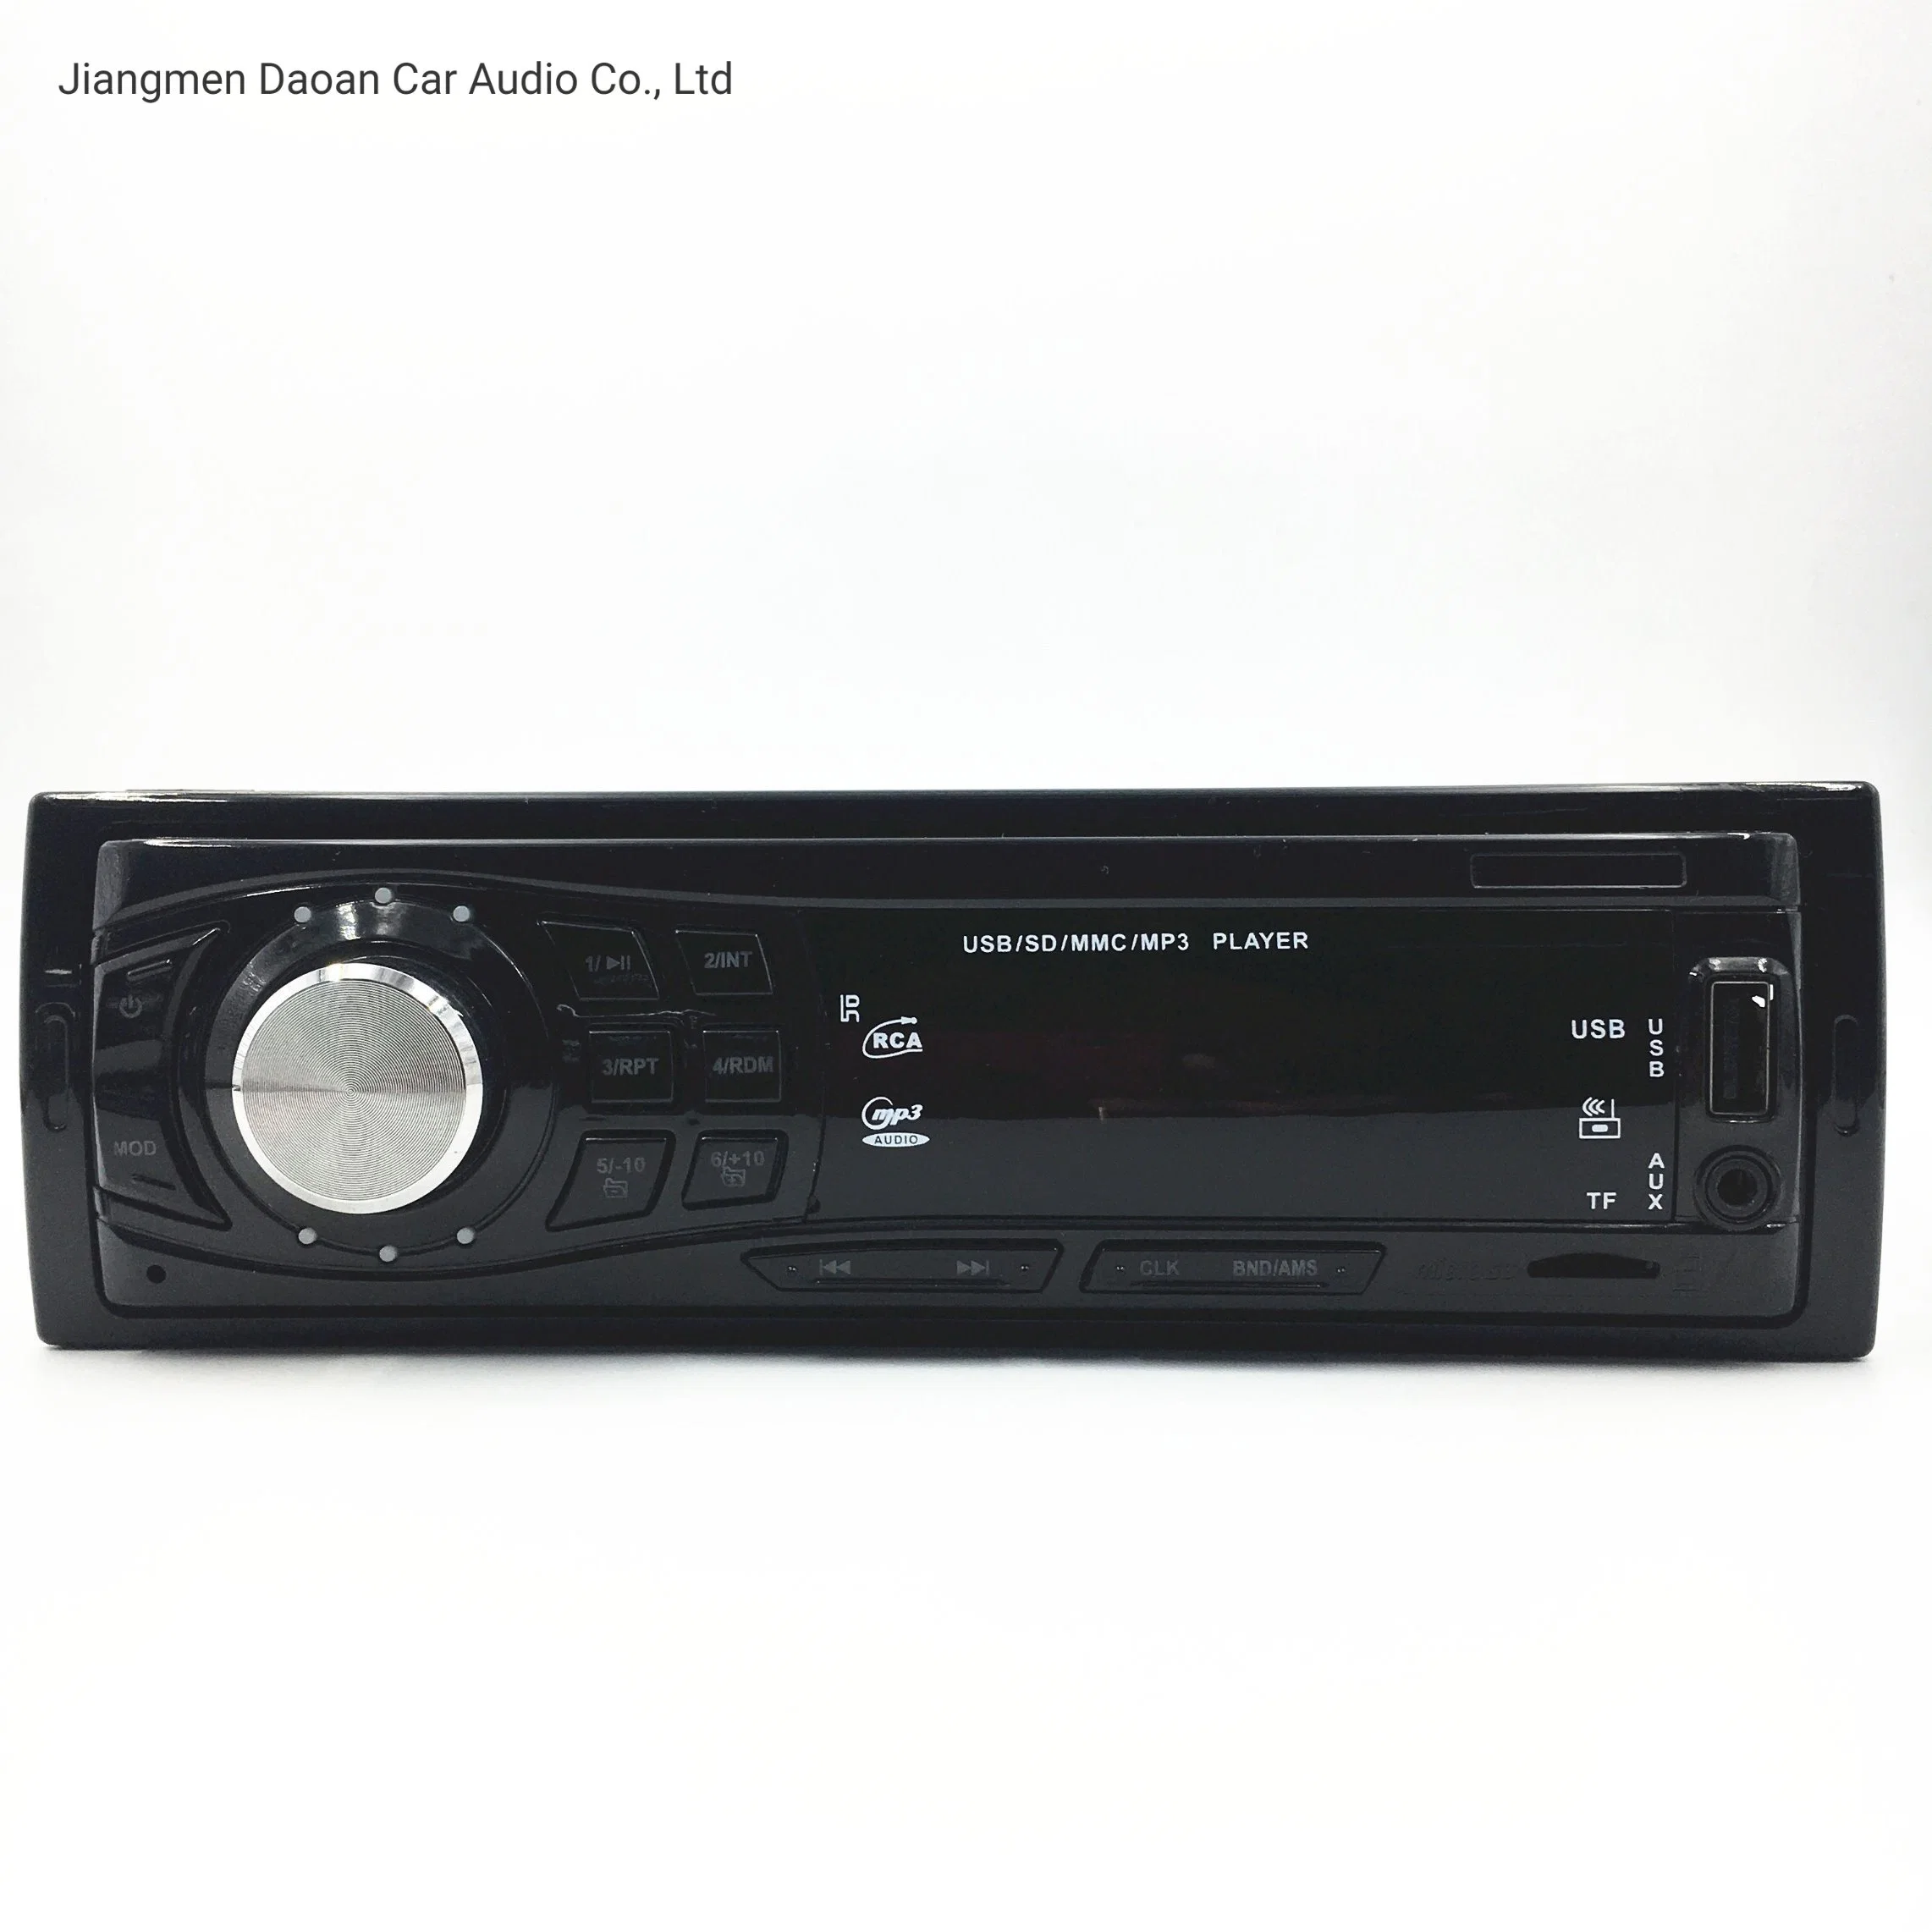 Single DIN Auto Consumer Electronics MP3 Audio Head Unit